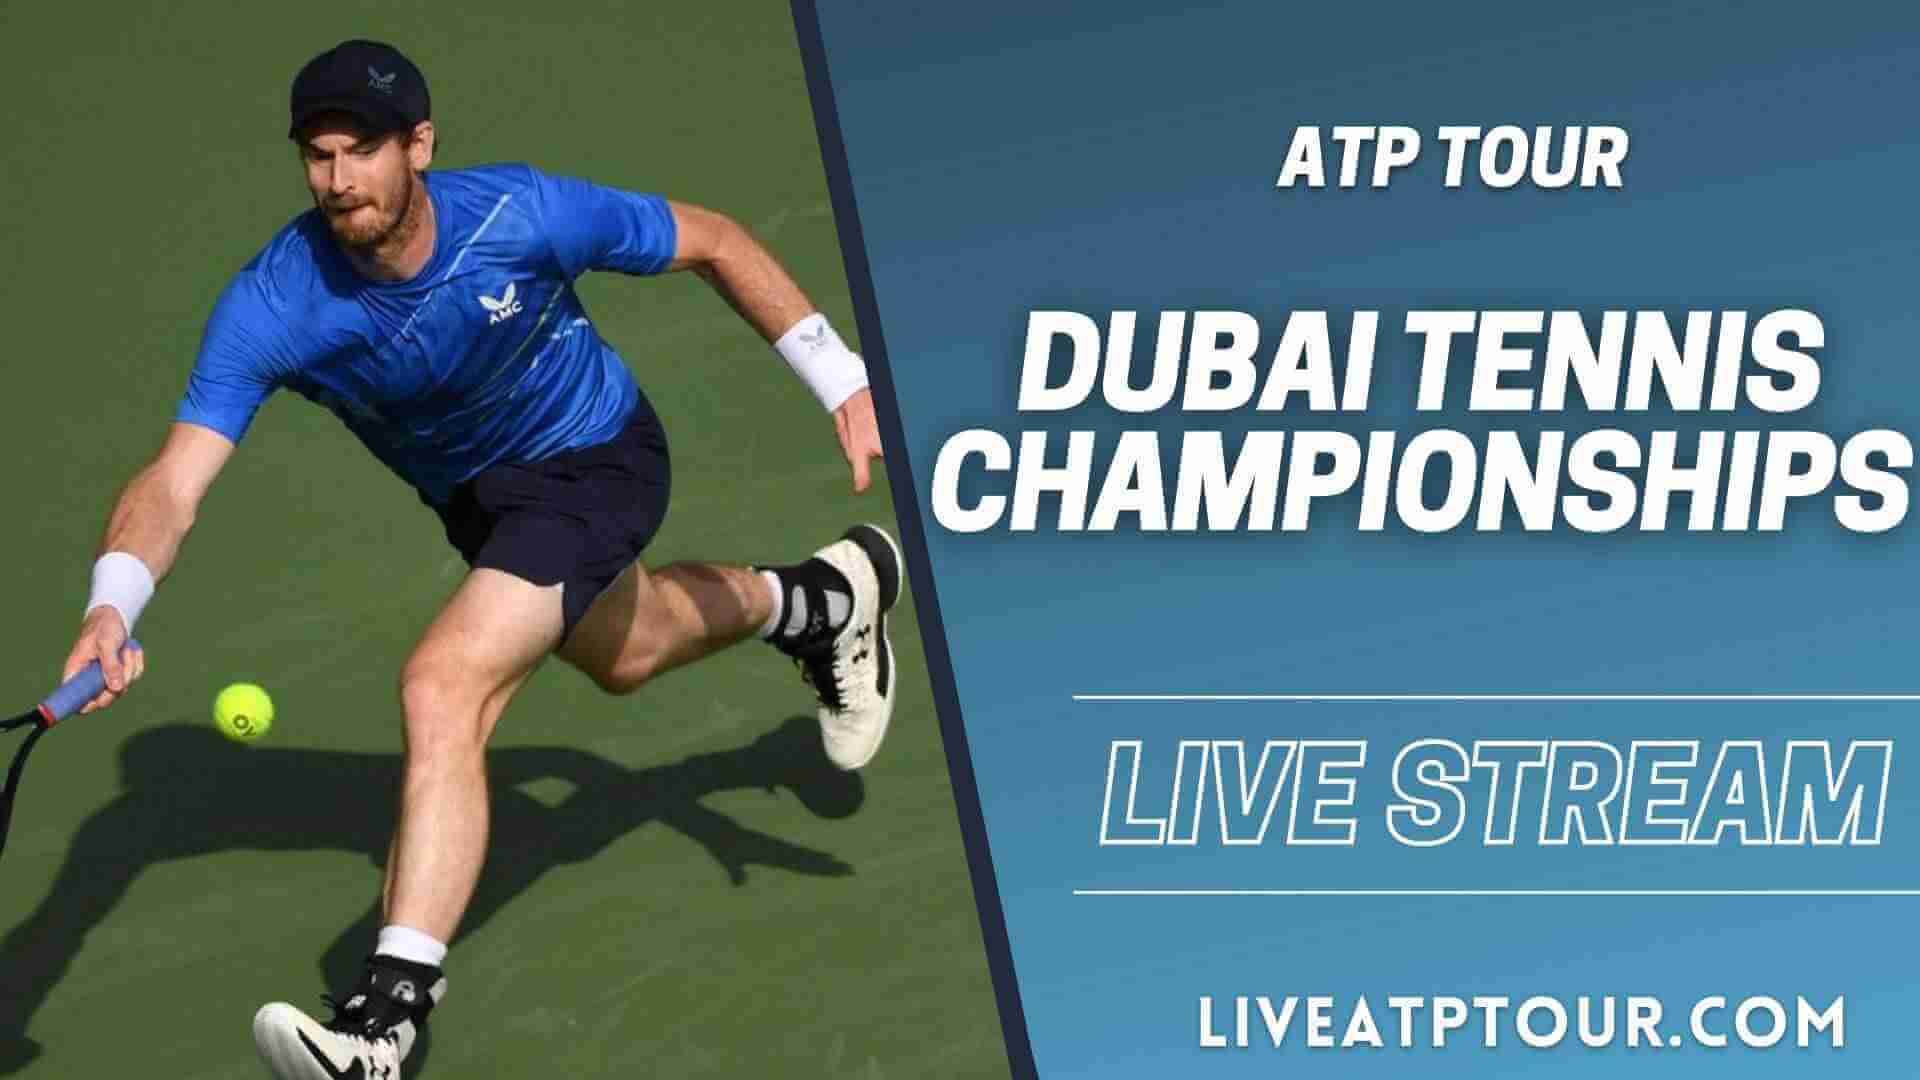 Dubai Tennis Championships ATP Tour Live Stream